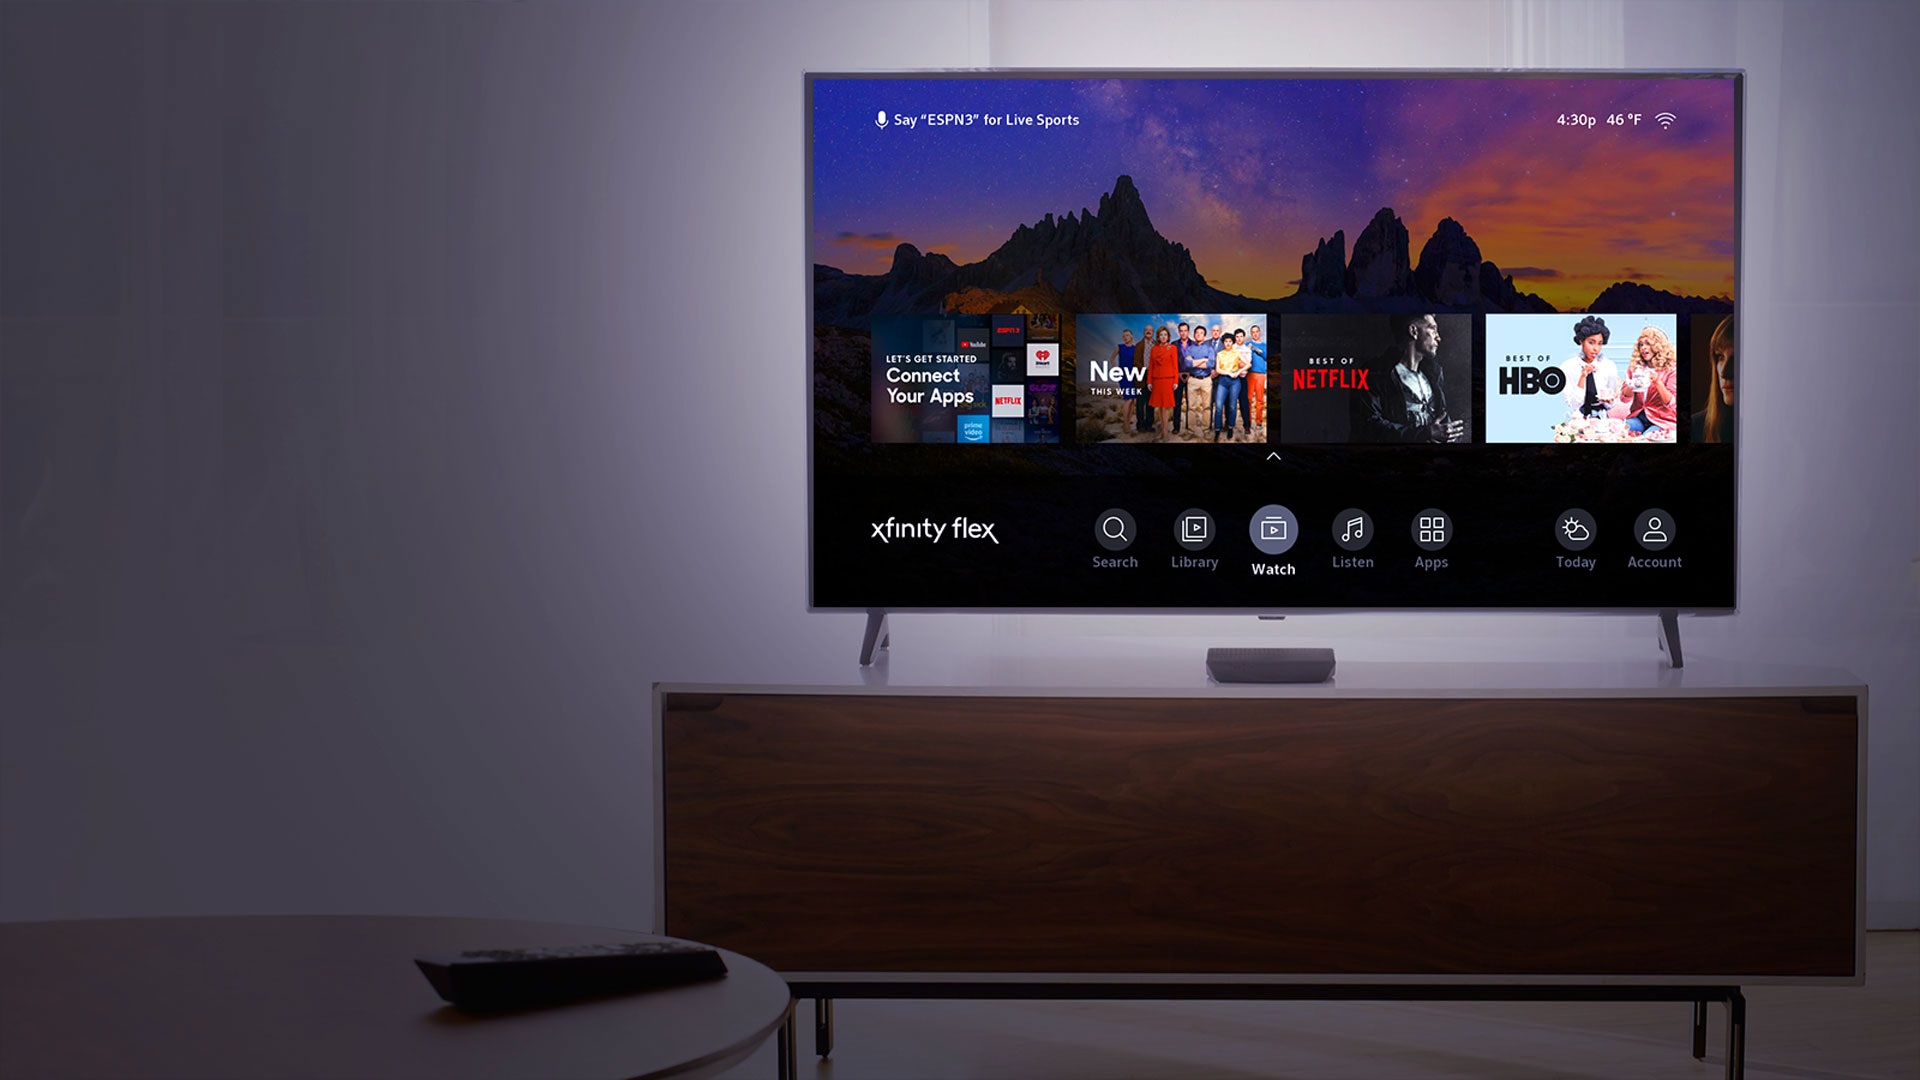 The Xfinity Flex home menu displayed on a TV.